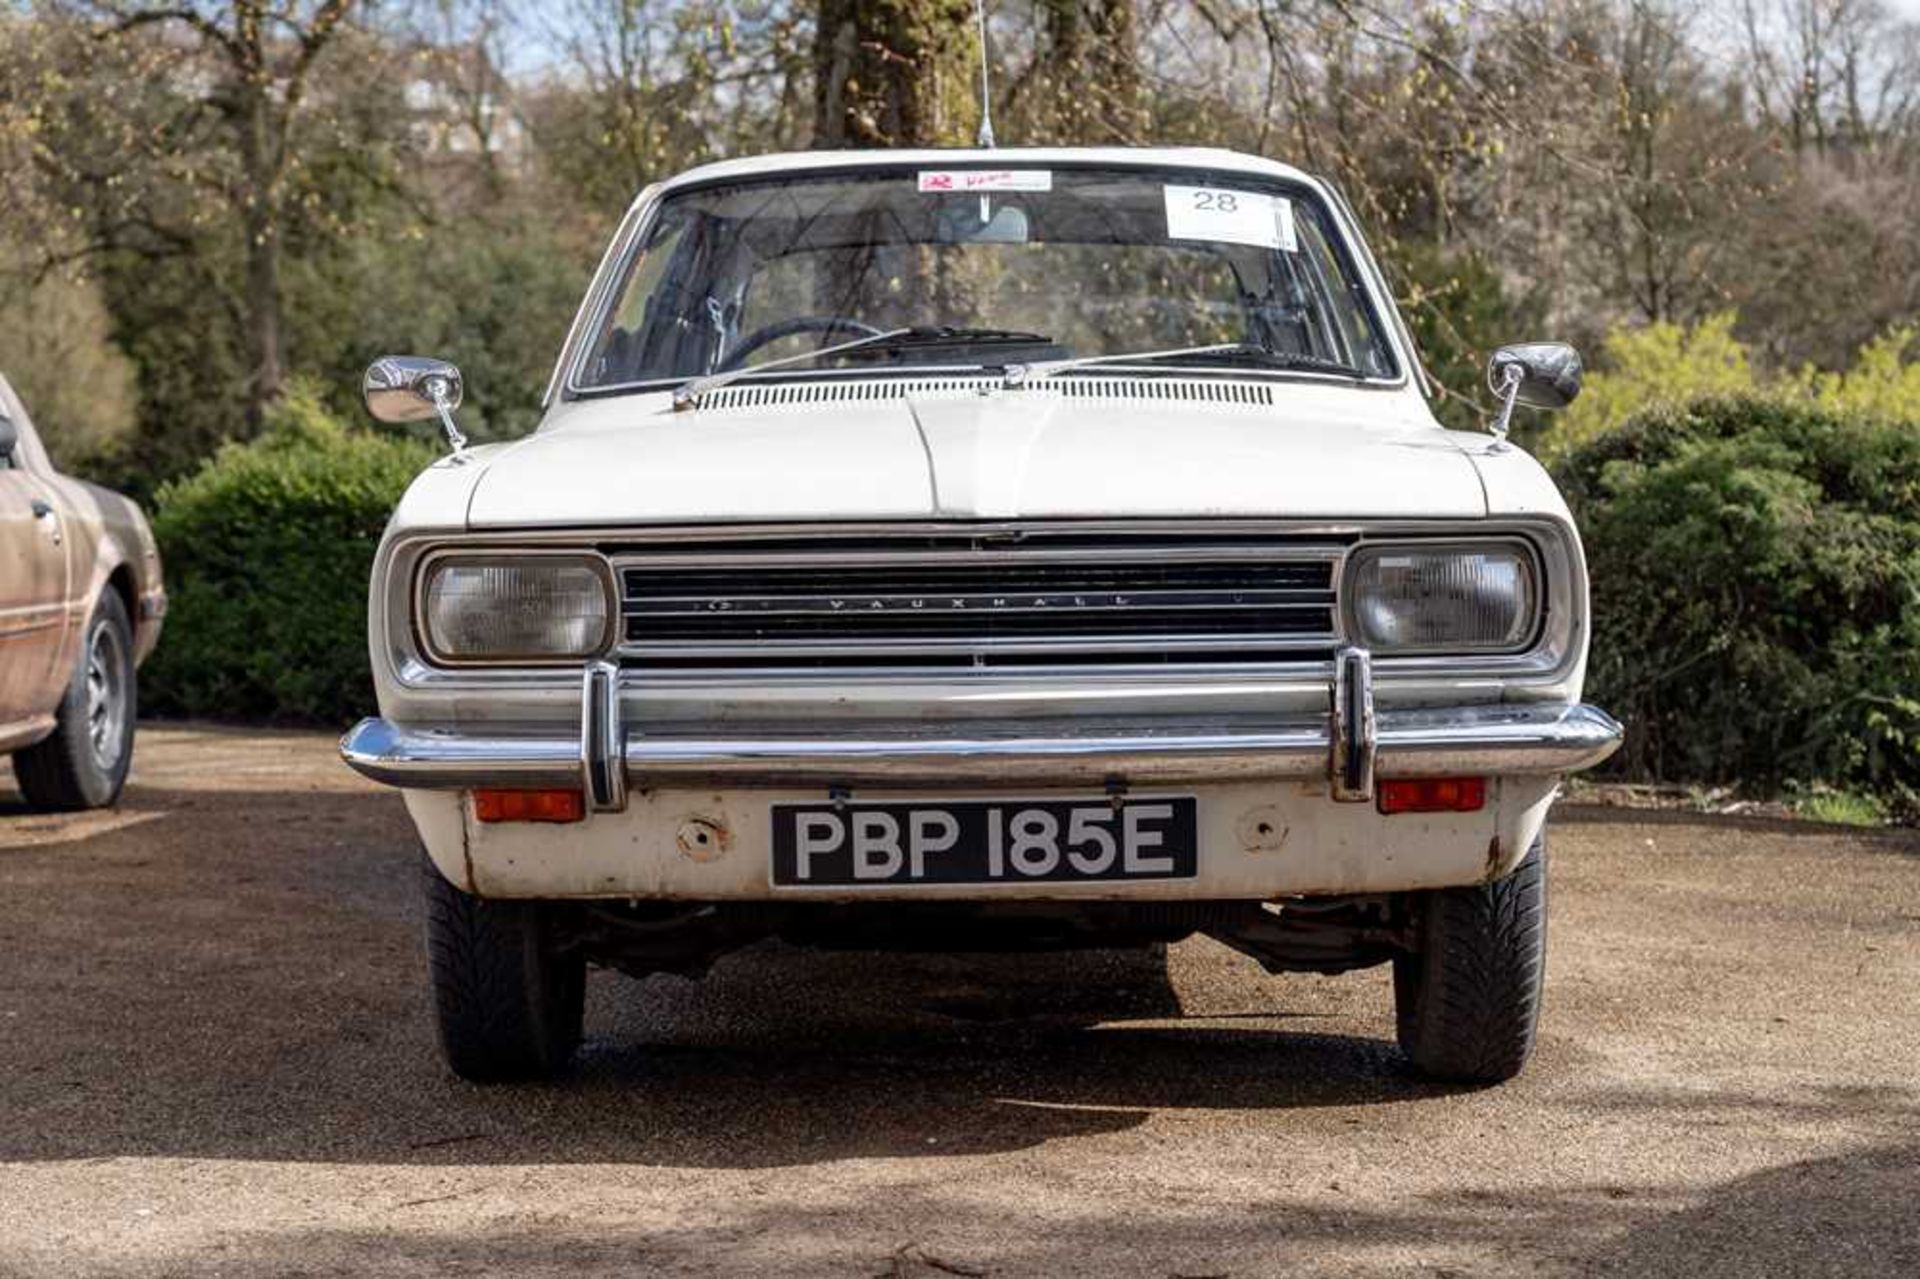 1967 Vauxhall Viva HB Period Blydenstein ‘Stage 2’ conversion - Image 3 of 33